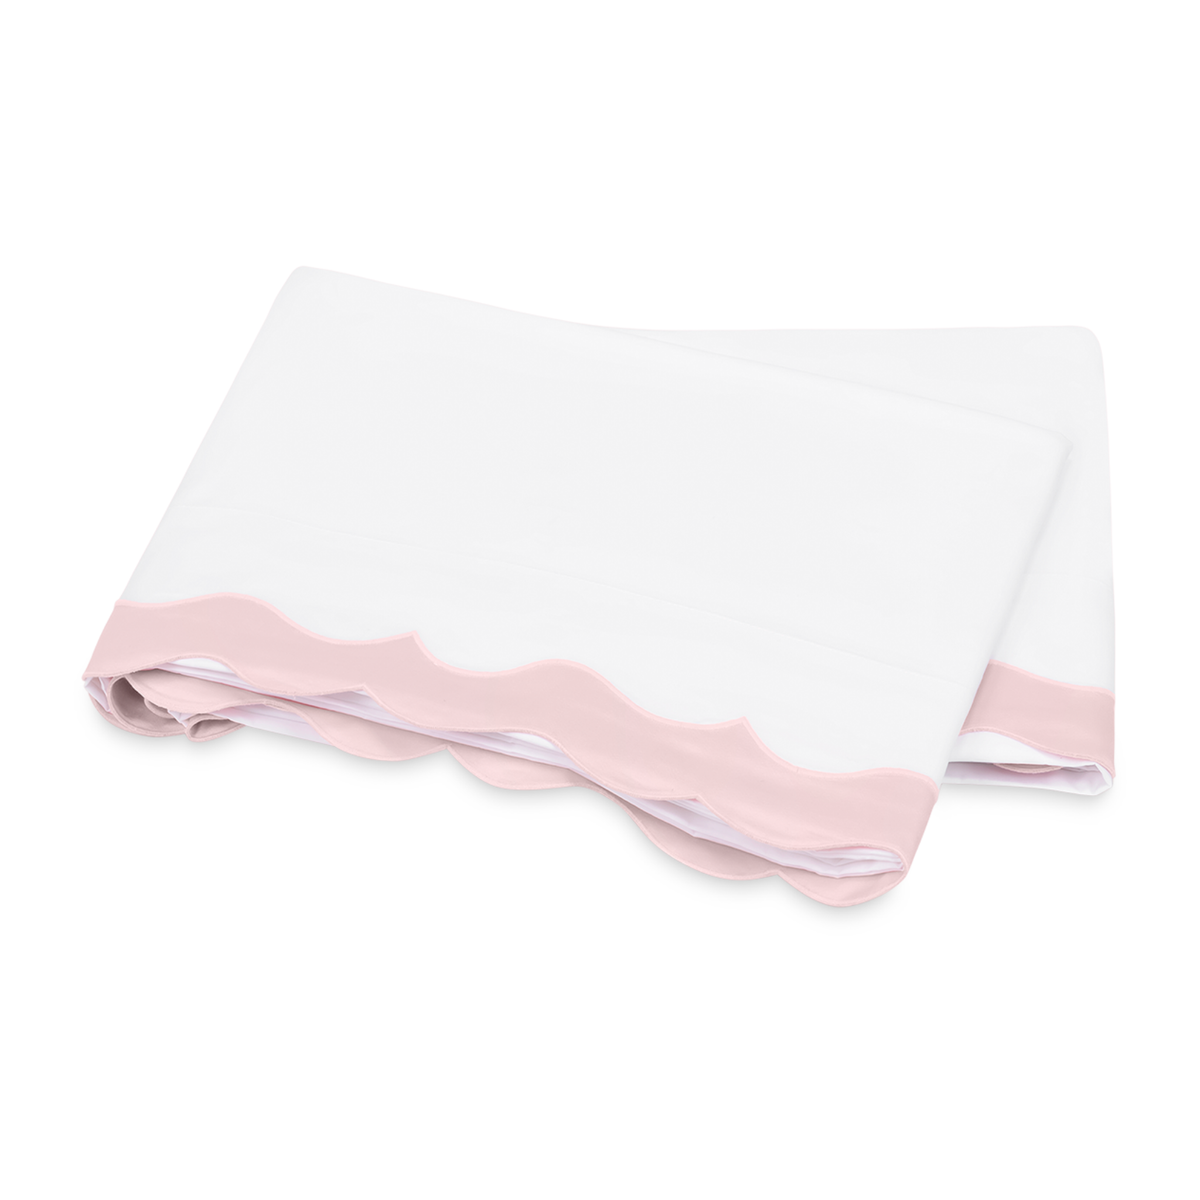 Folded Flat Sheet of Matouk Lorelei Bedding in Pink Color